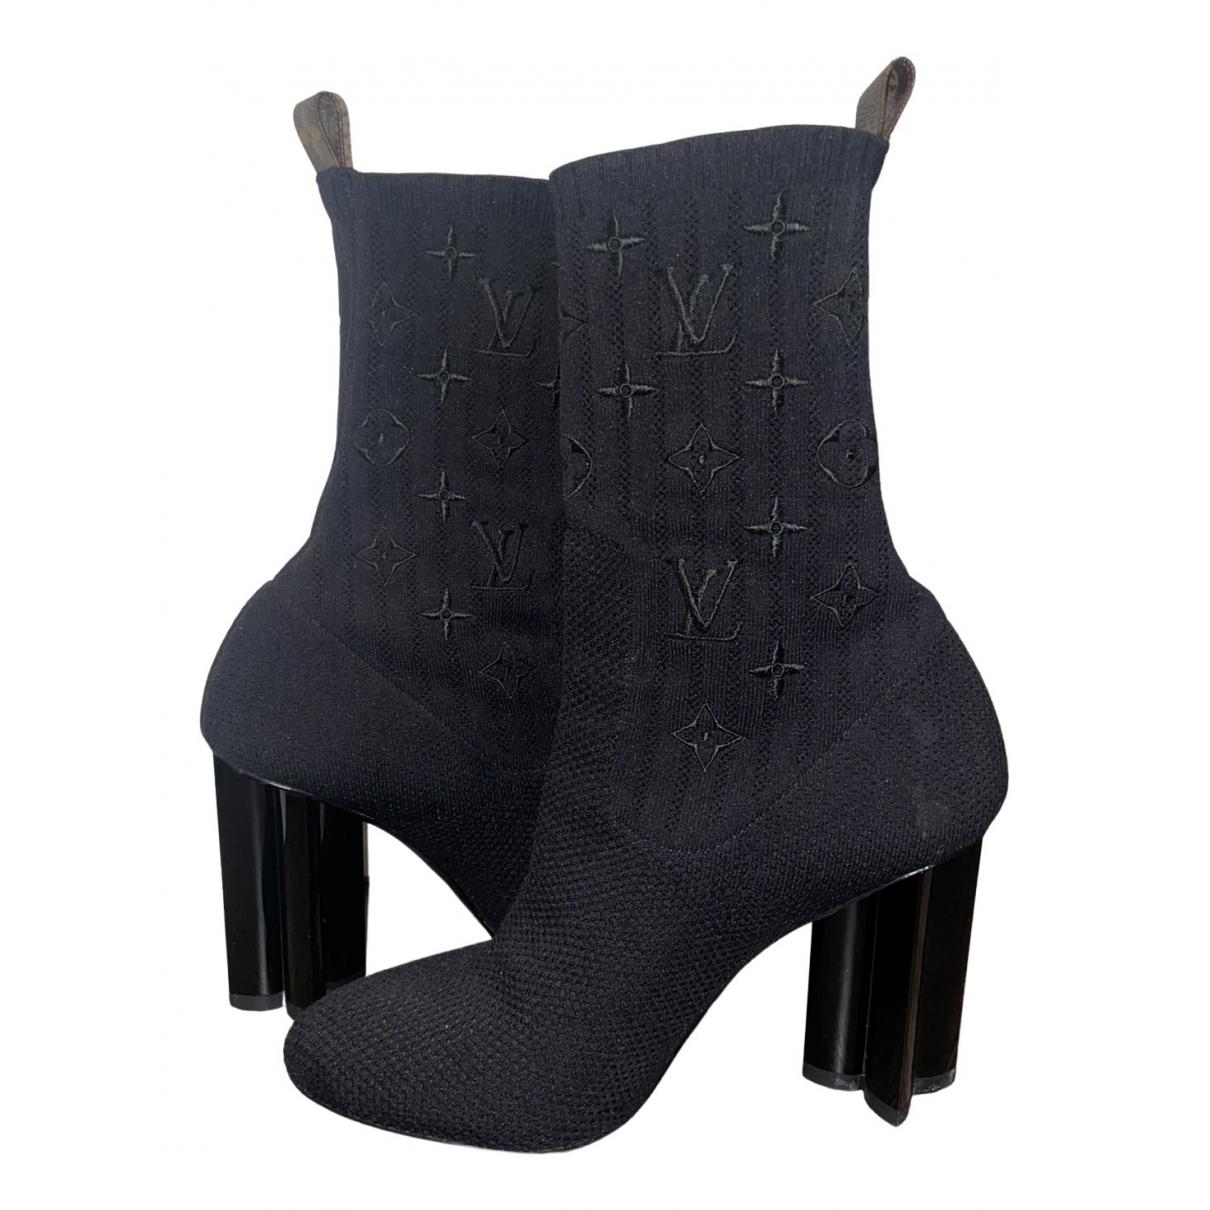 Silhouette cloth ankle boots Louis Vuitton Black size 38 EU in Cloth -  28809831